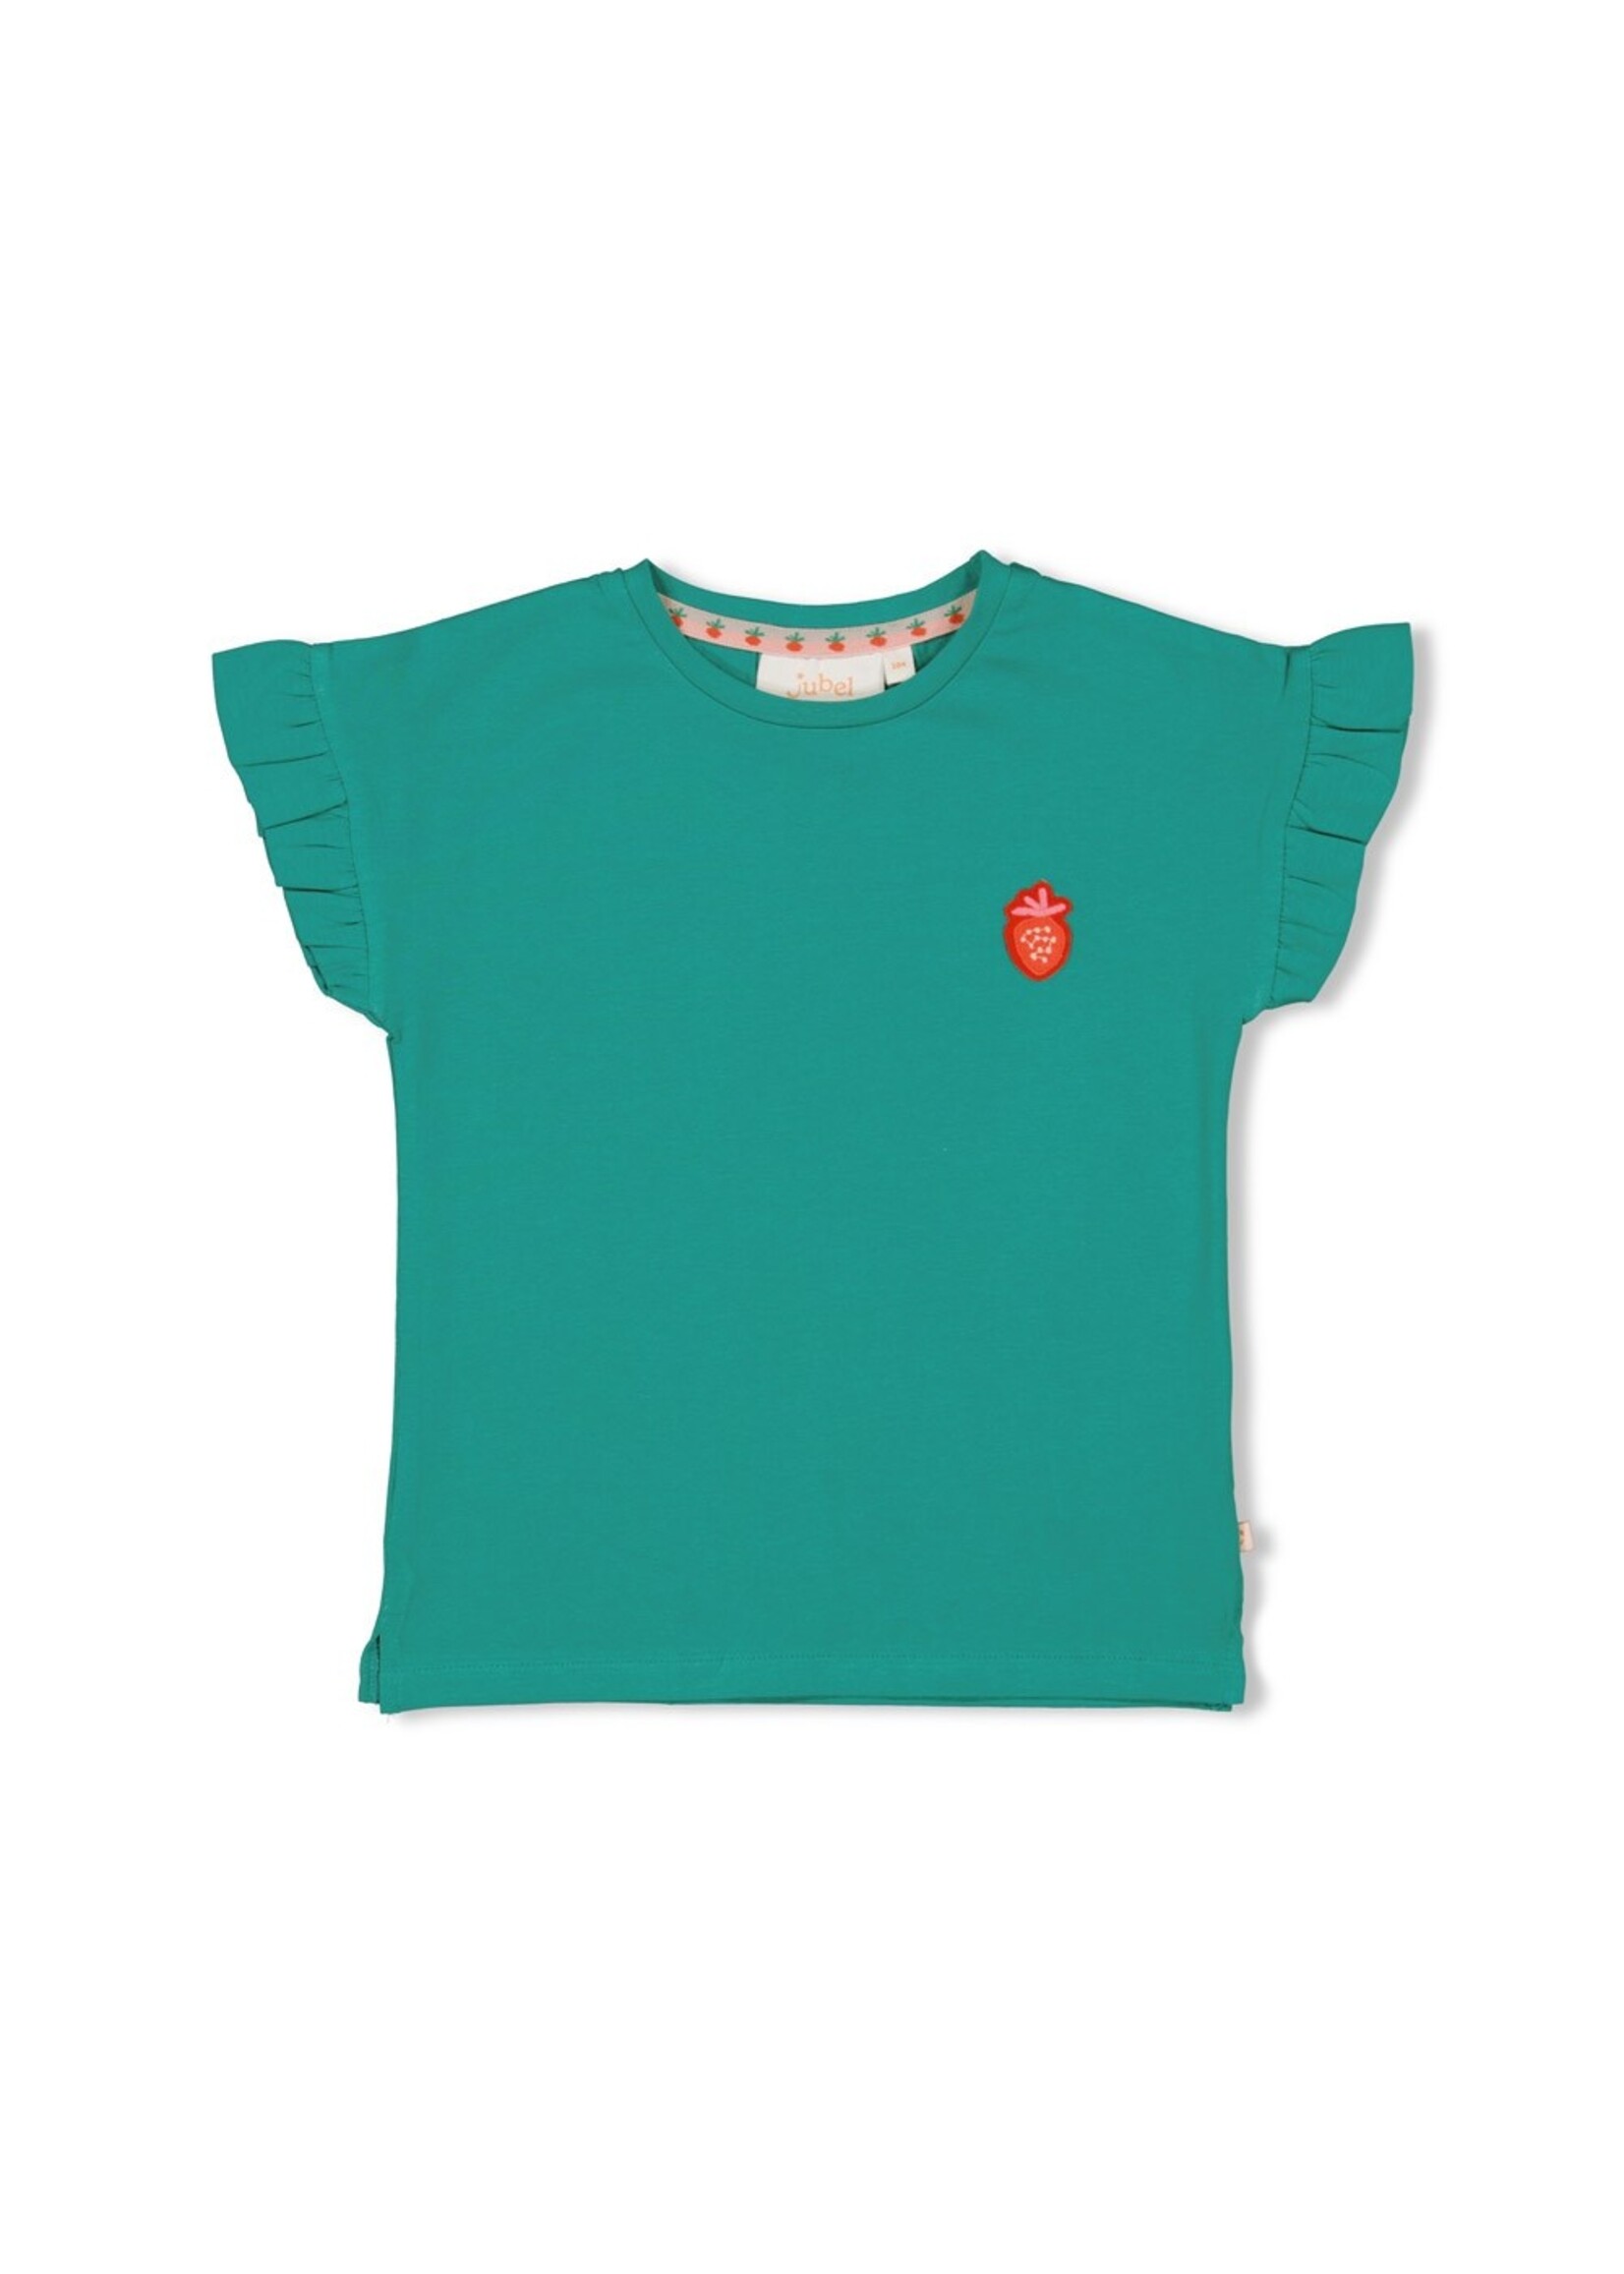 Jubel T-shirt - Berry Nice Groen